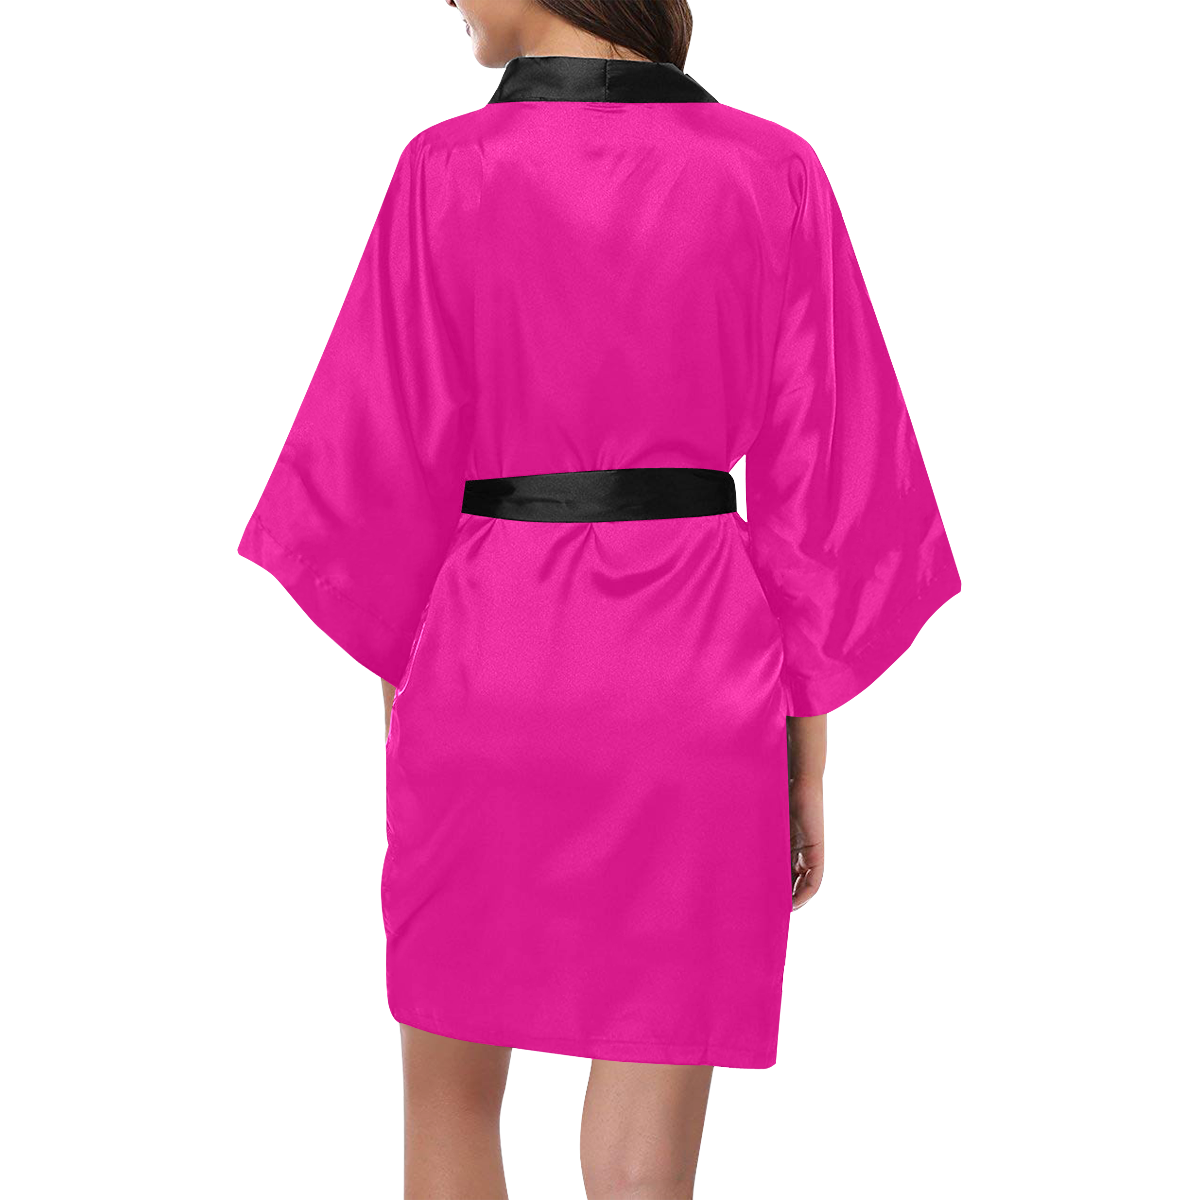 fuscia hot pink with black belt Kimono Robe